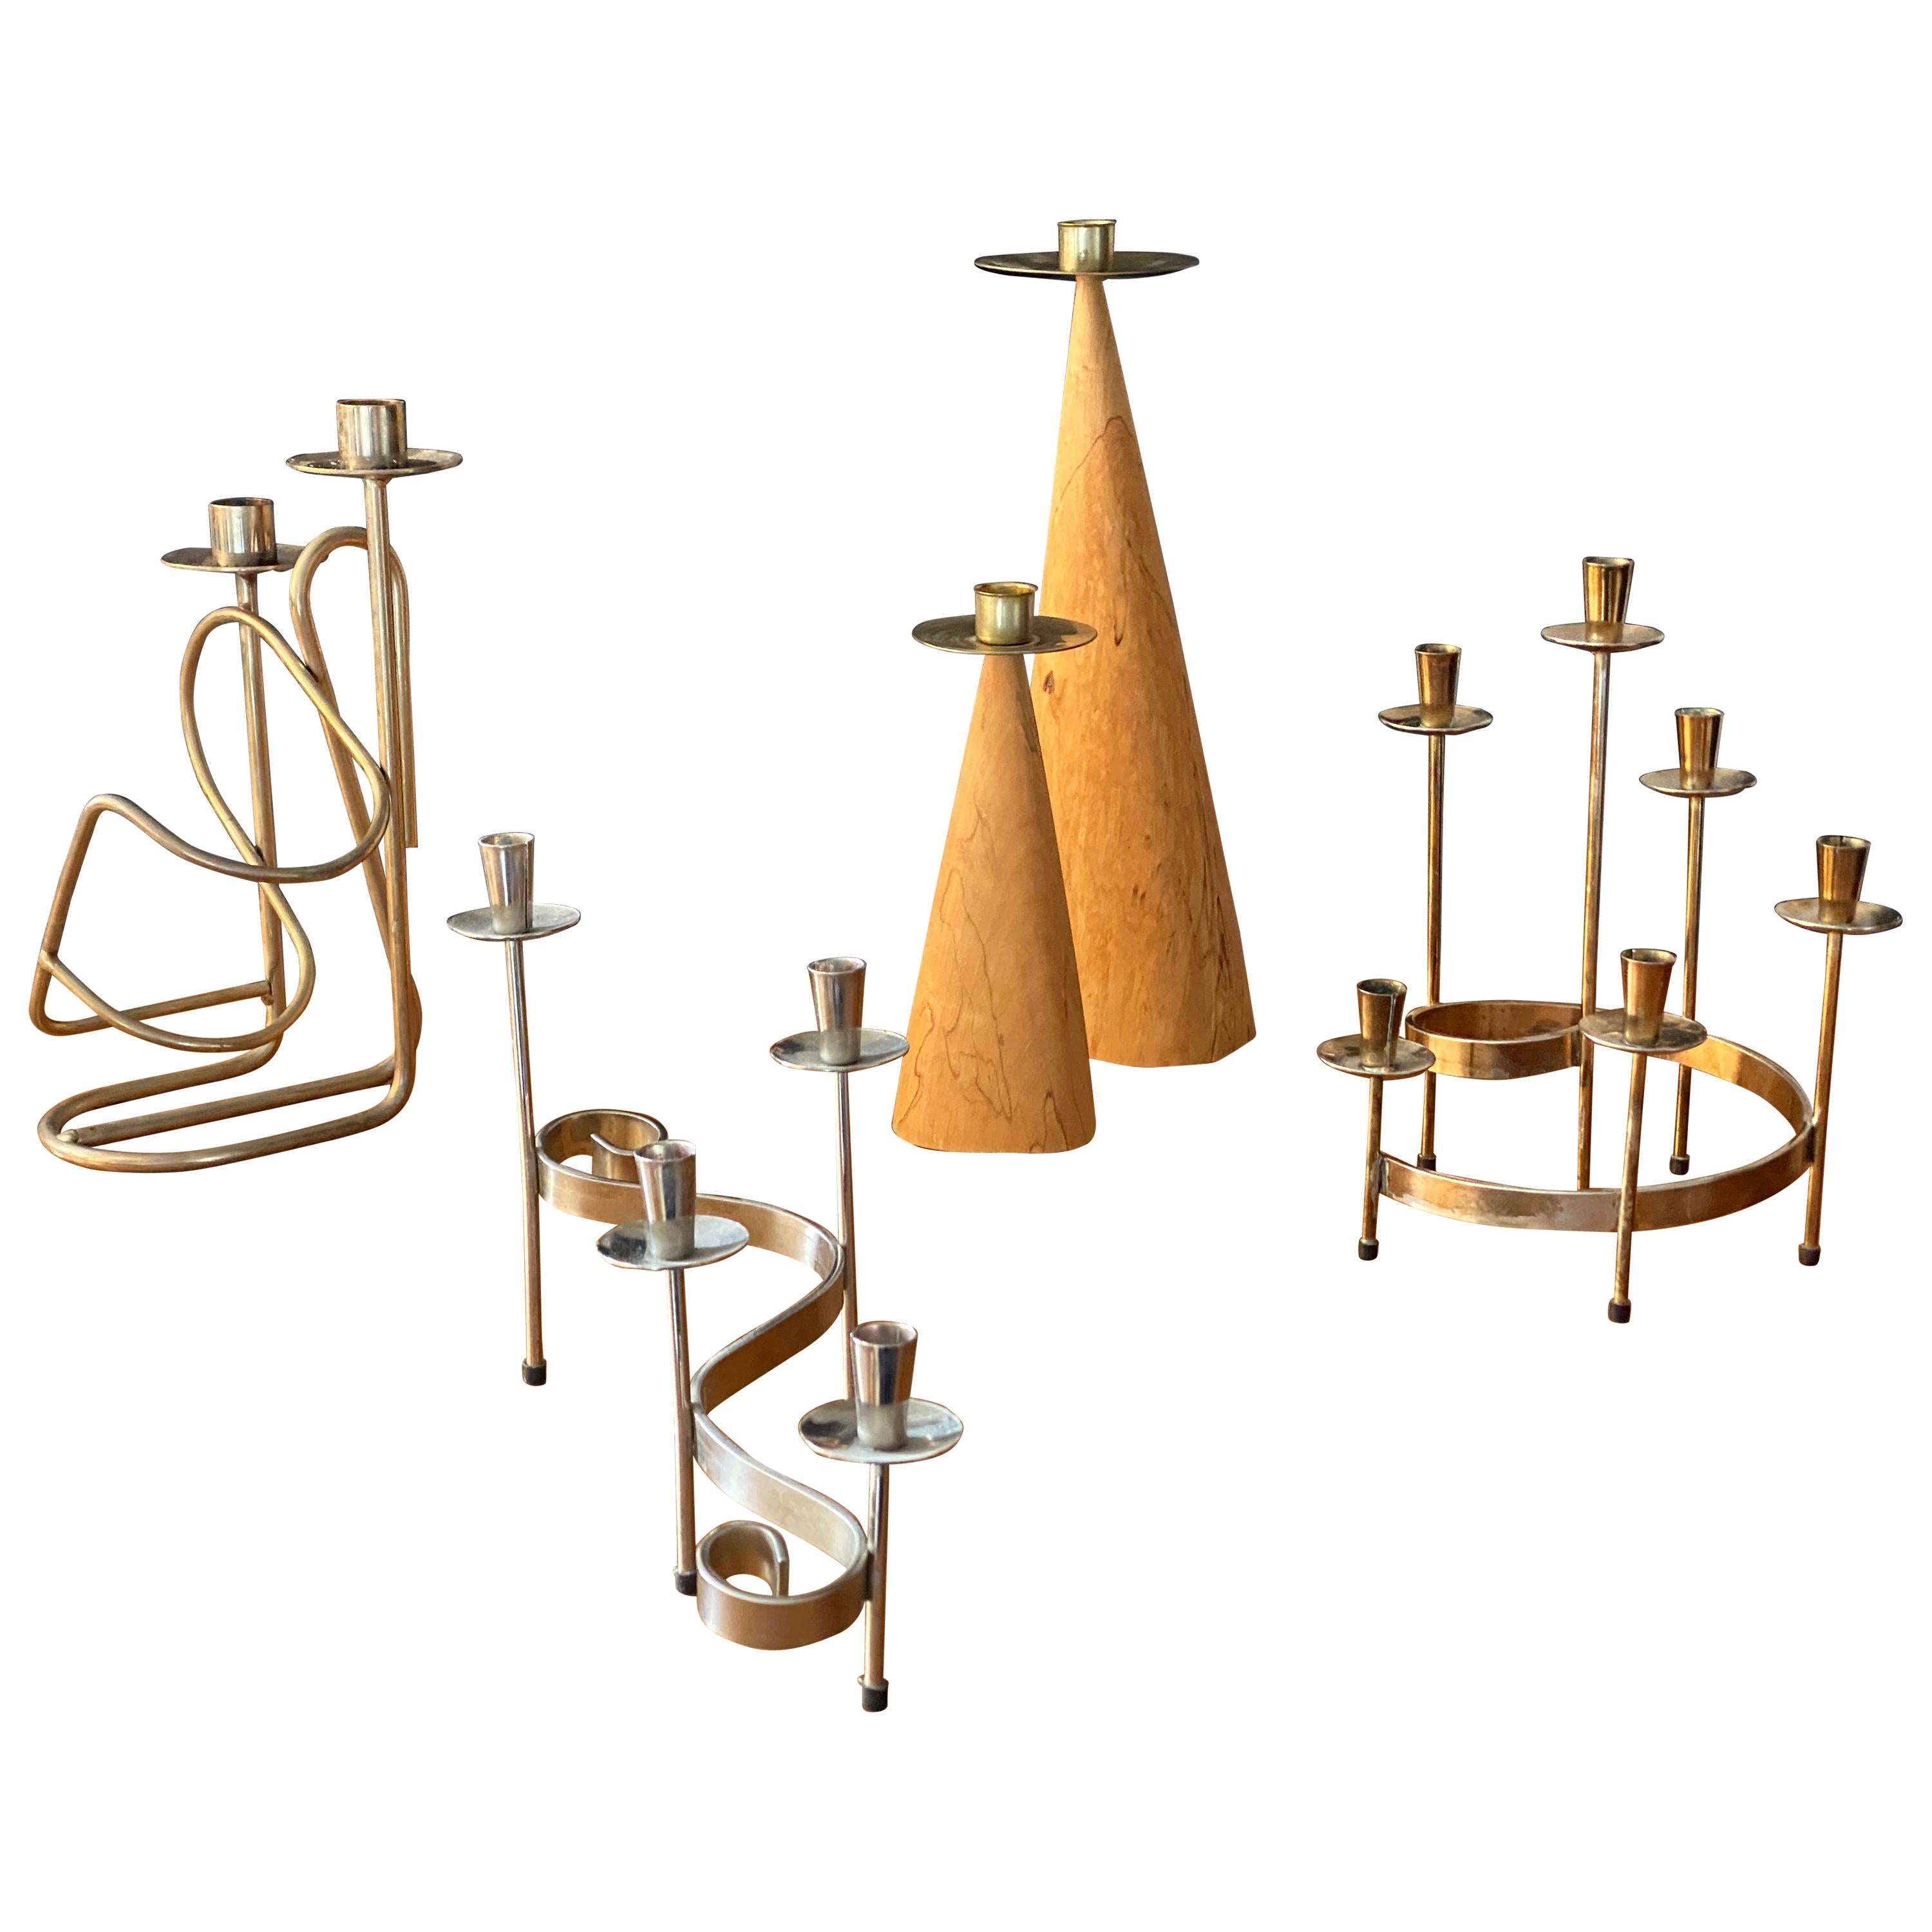 Swedish Design, Collection of Candlesticks or Candelabra, Wood, Brass, Steel